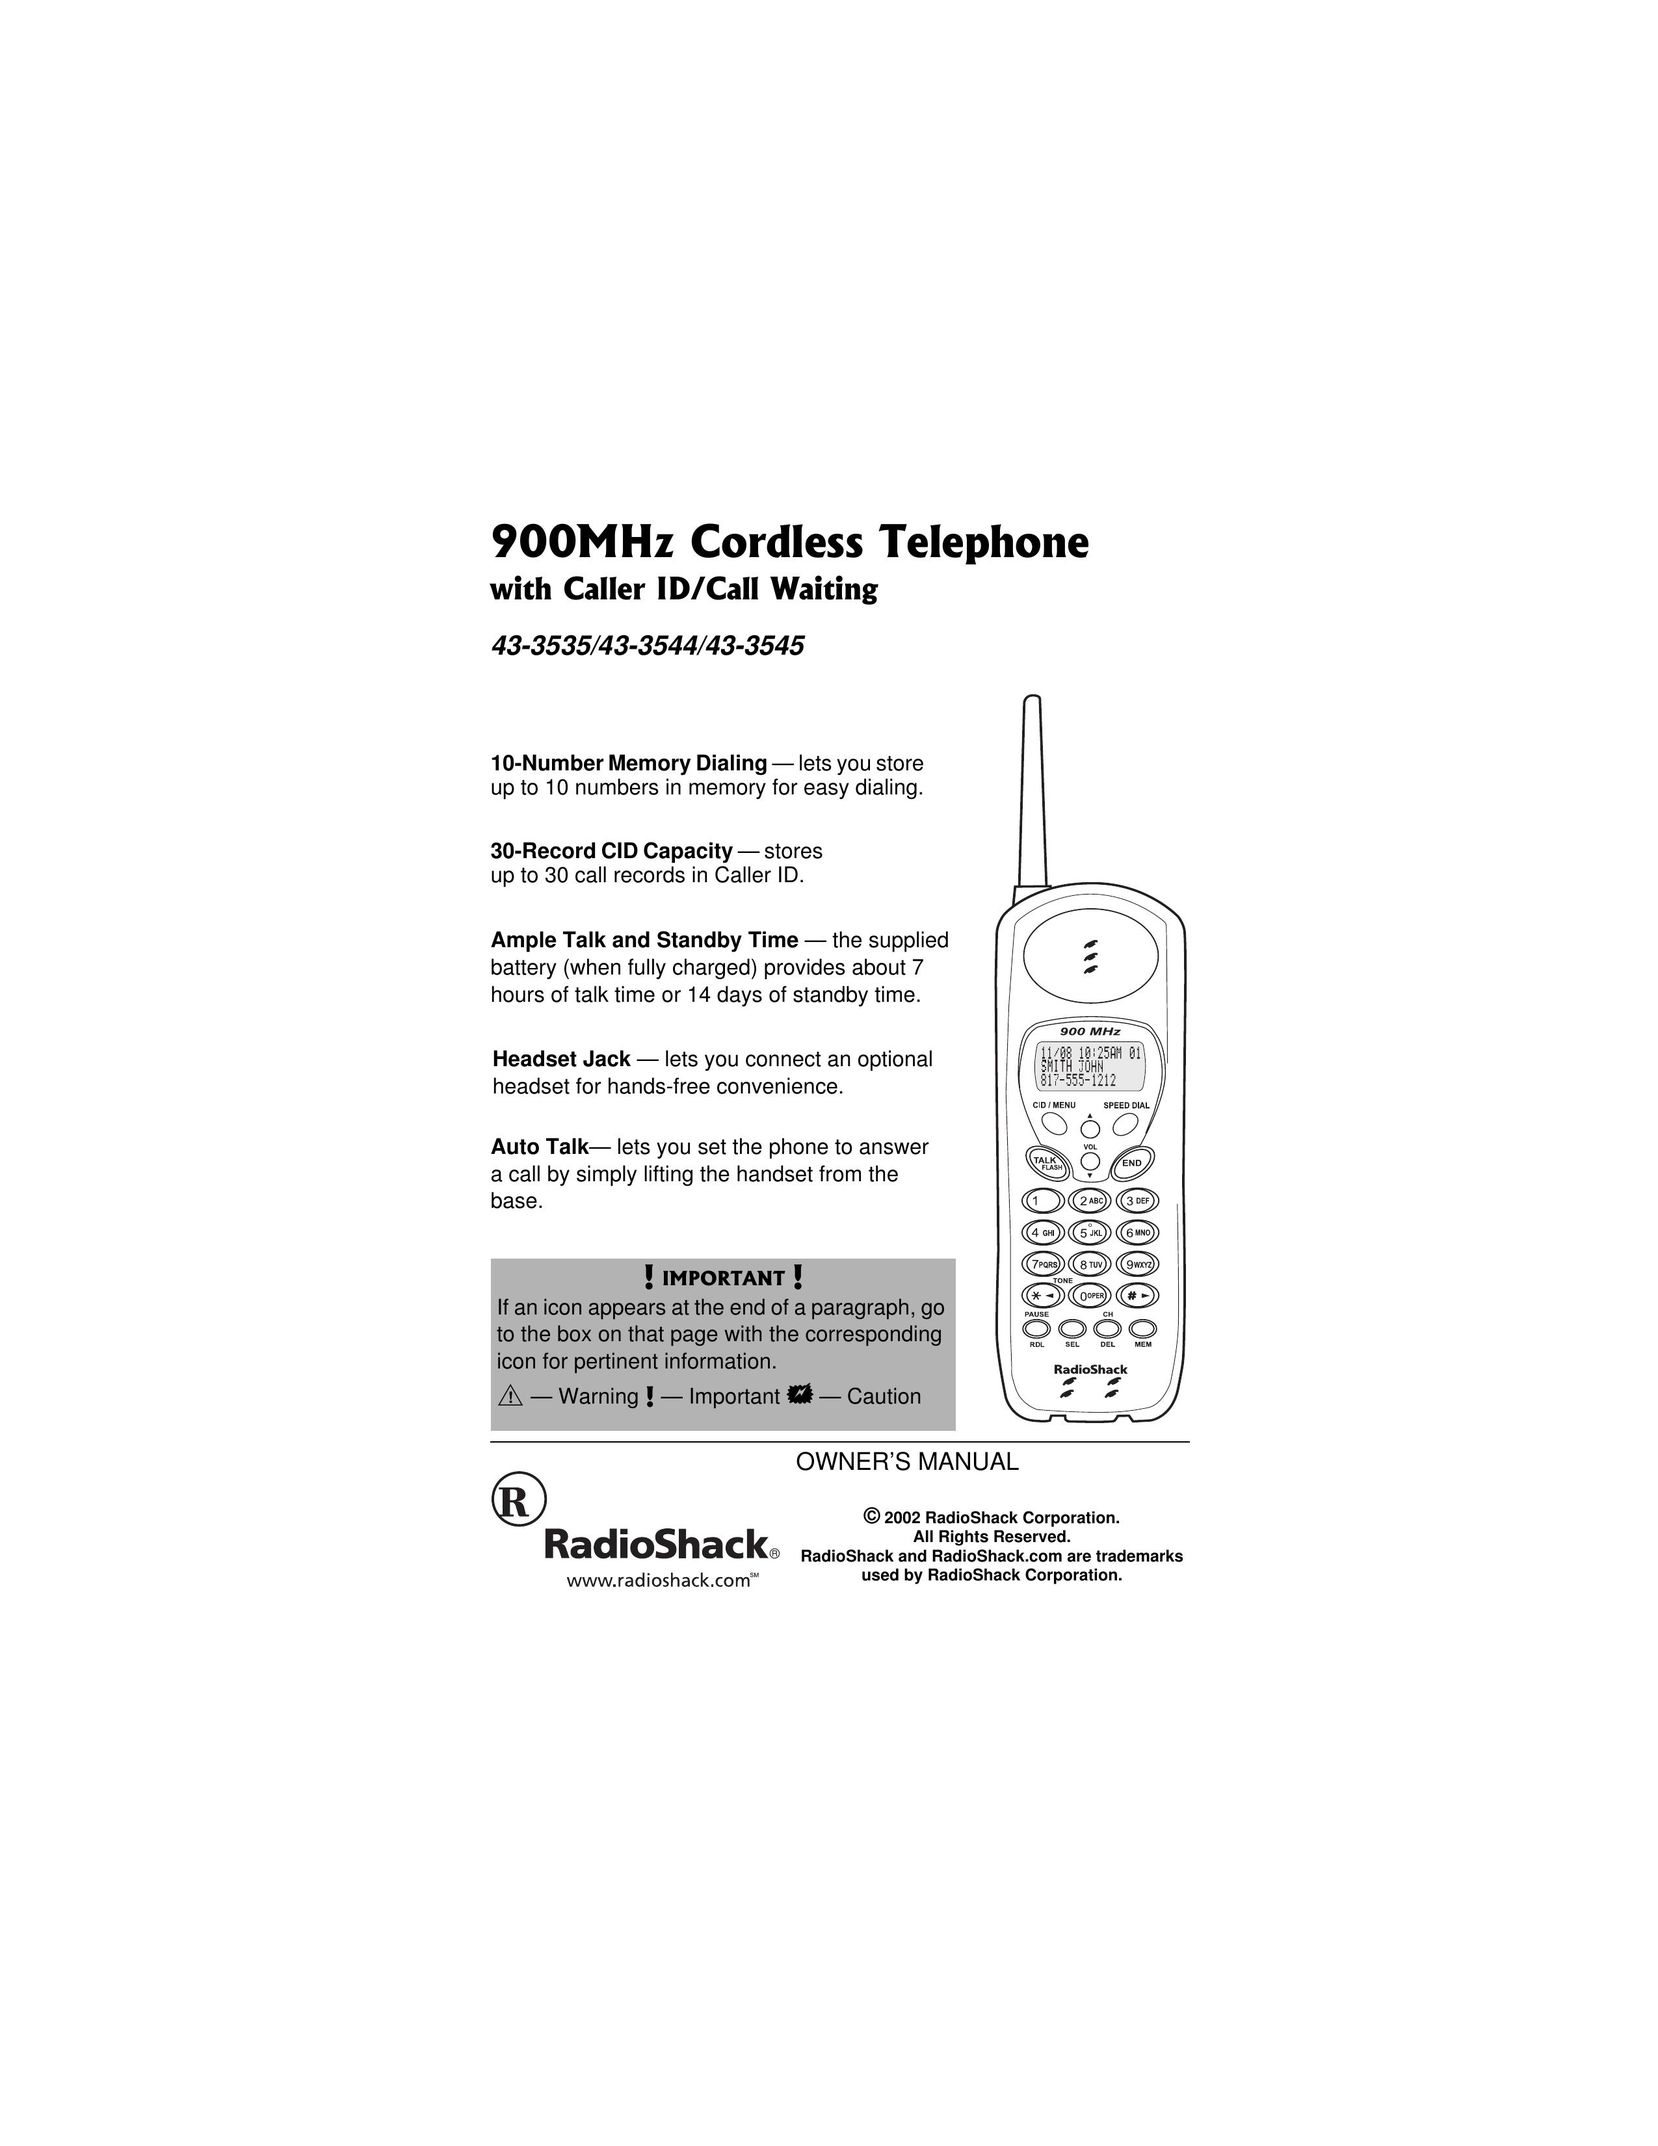 Radio Shack 43-3544 Cordless Telephone User Manual